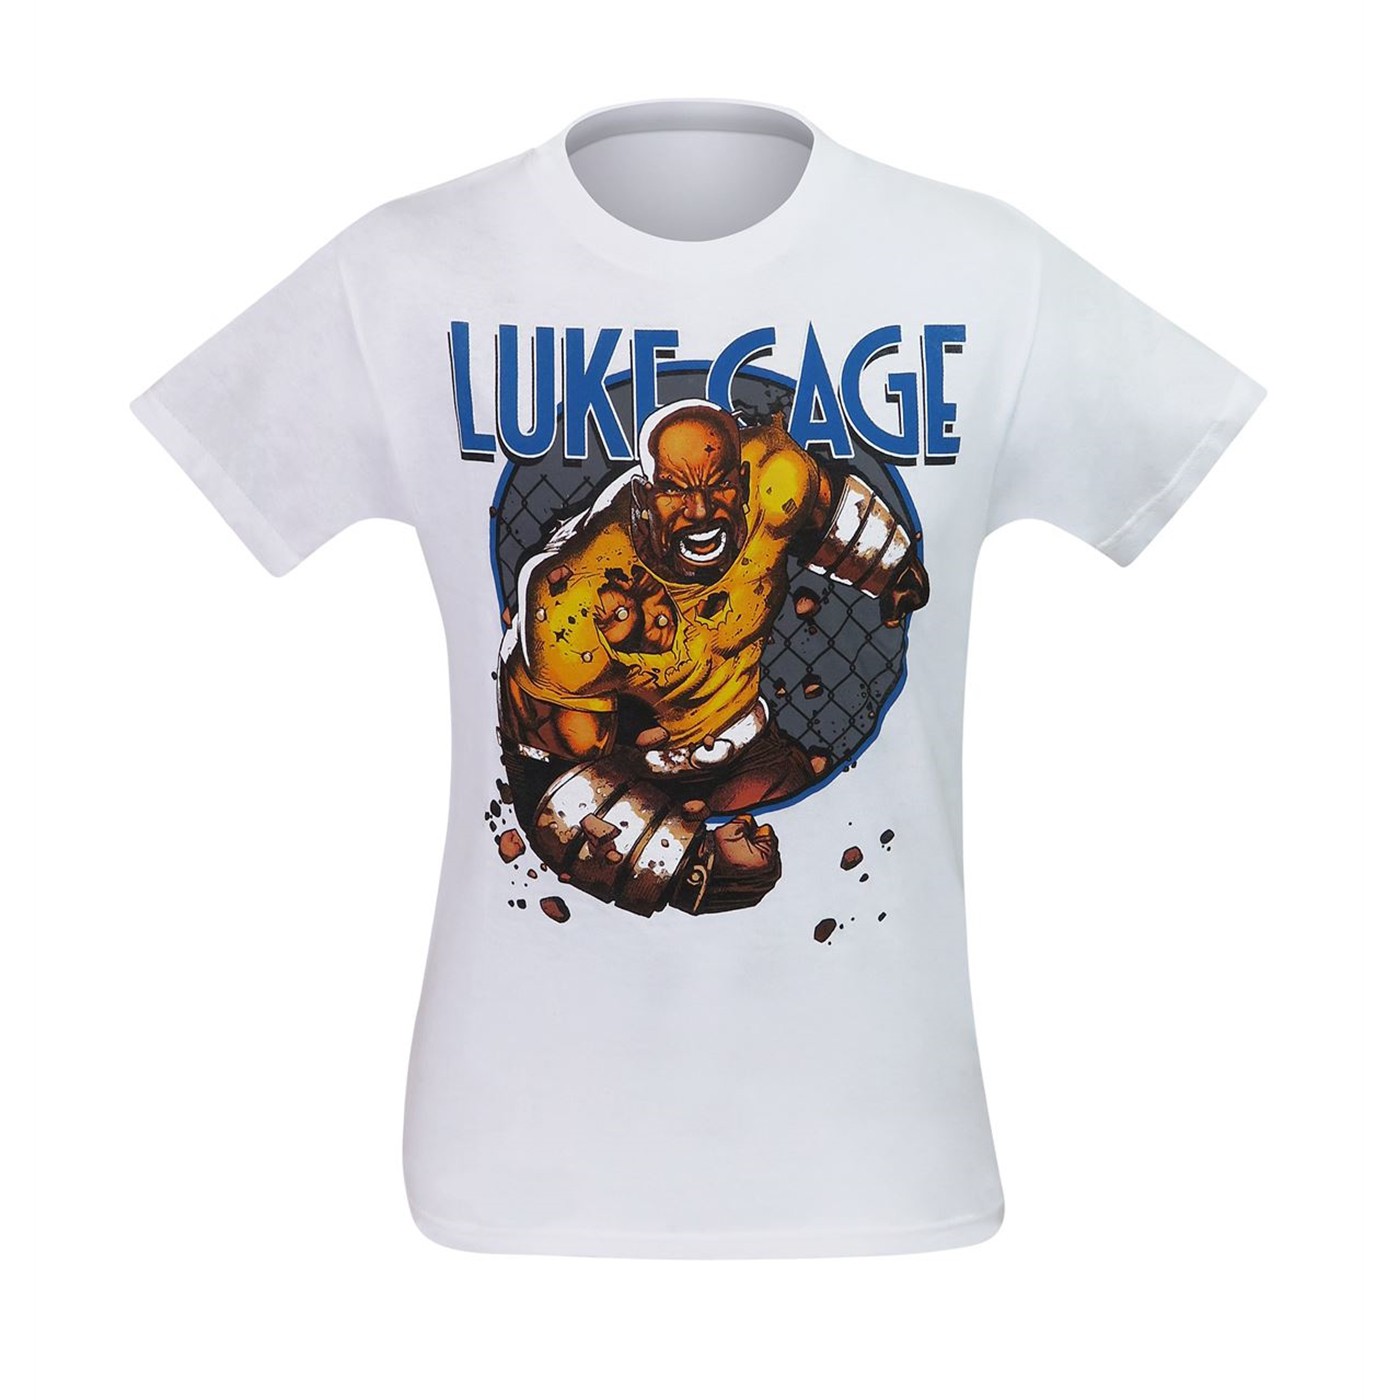 Luke Cage Cage-Match Men's T-Shirt